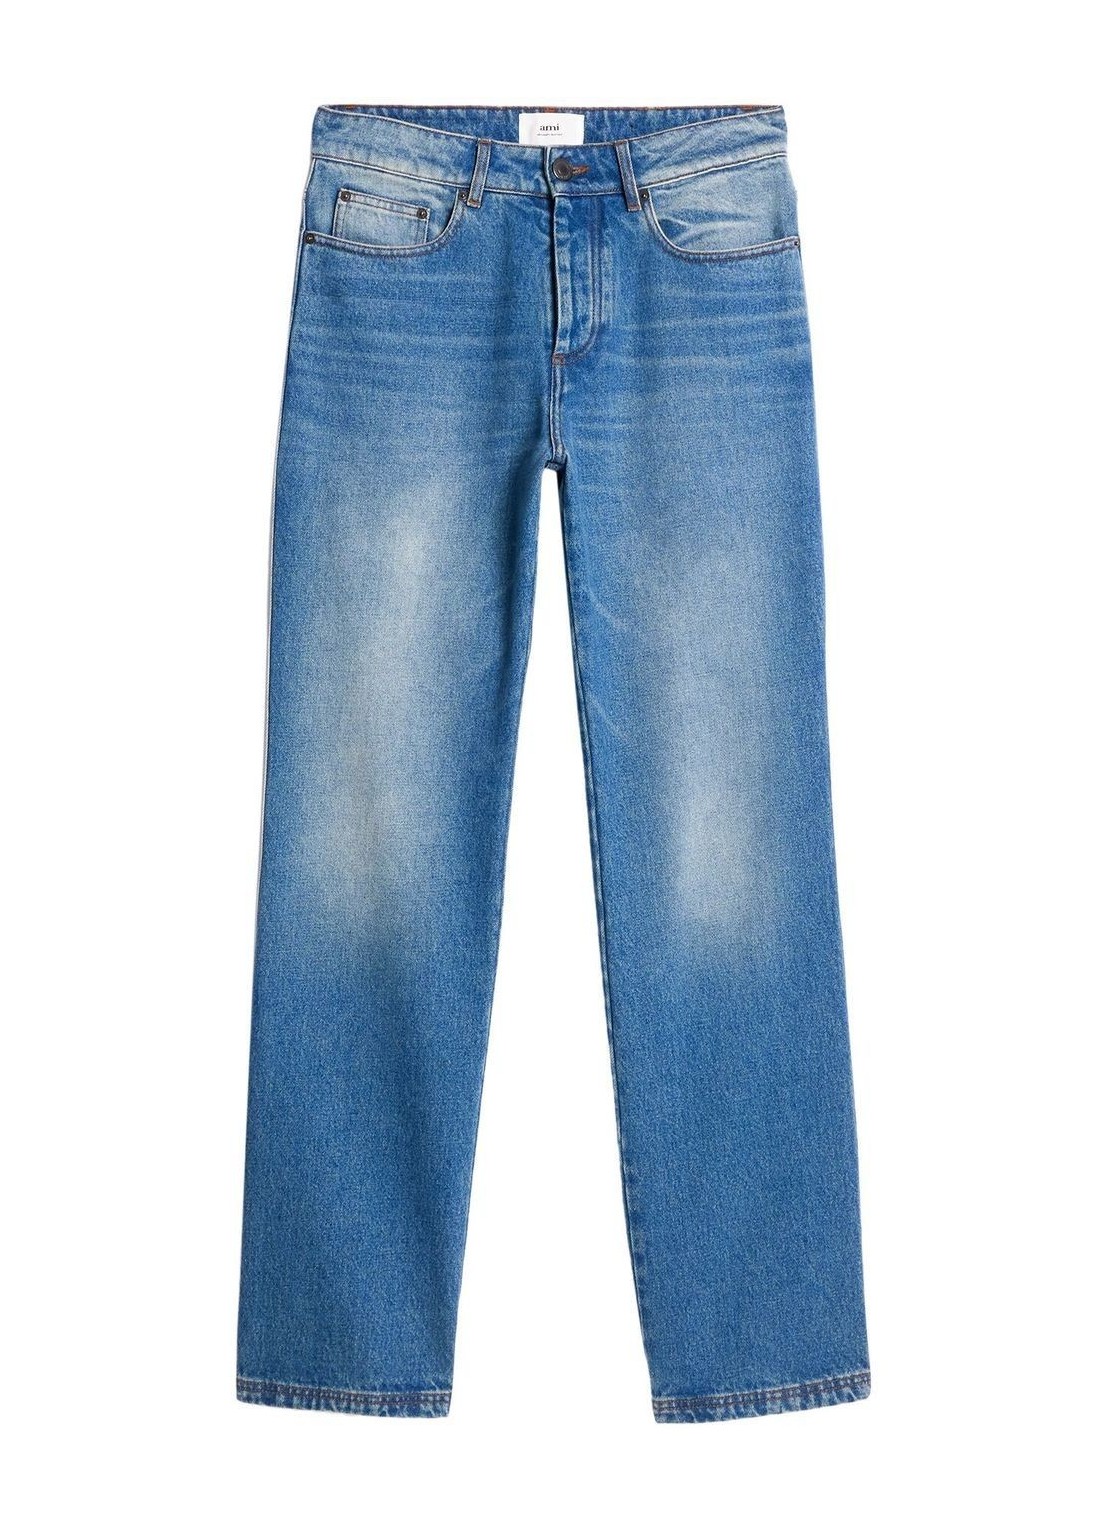 Pantalon jeans ami denim man straight fit jean htr500de0001 480 talla 31
 